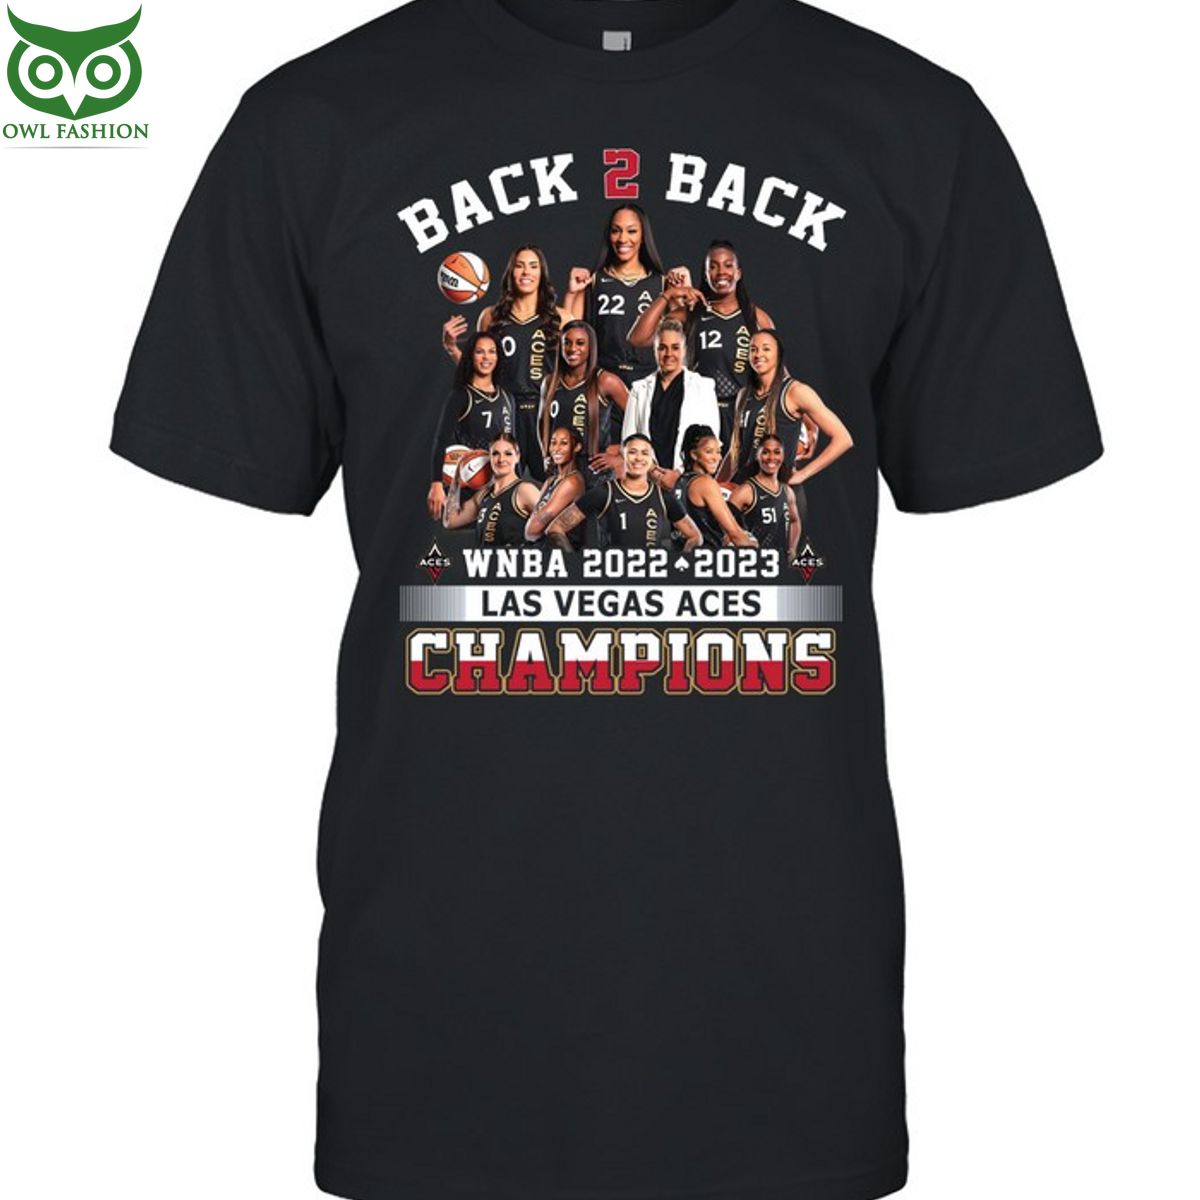 WNBA Back to back Champions Shirt Las Vegas Aces 2d t shirt